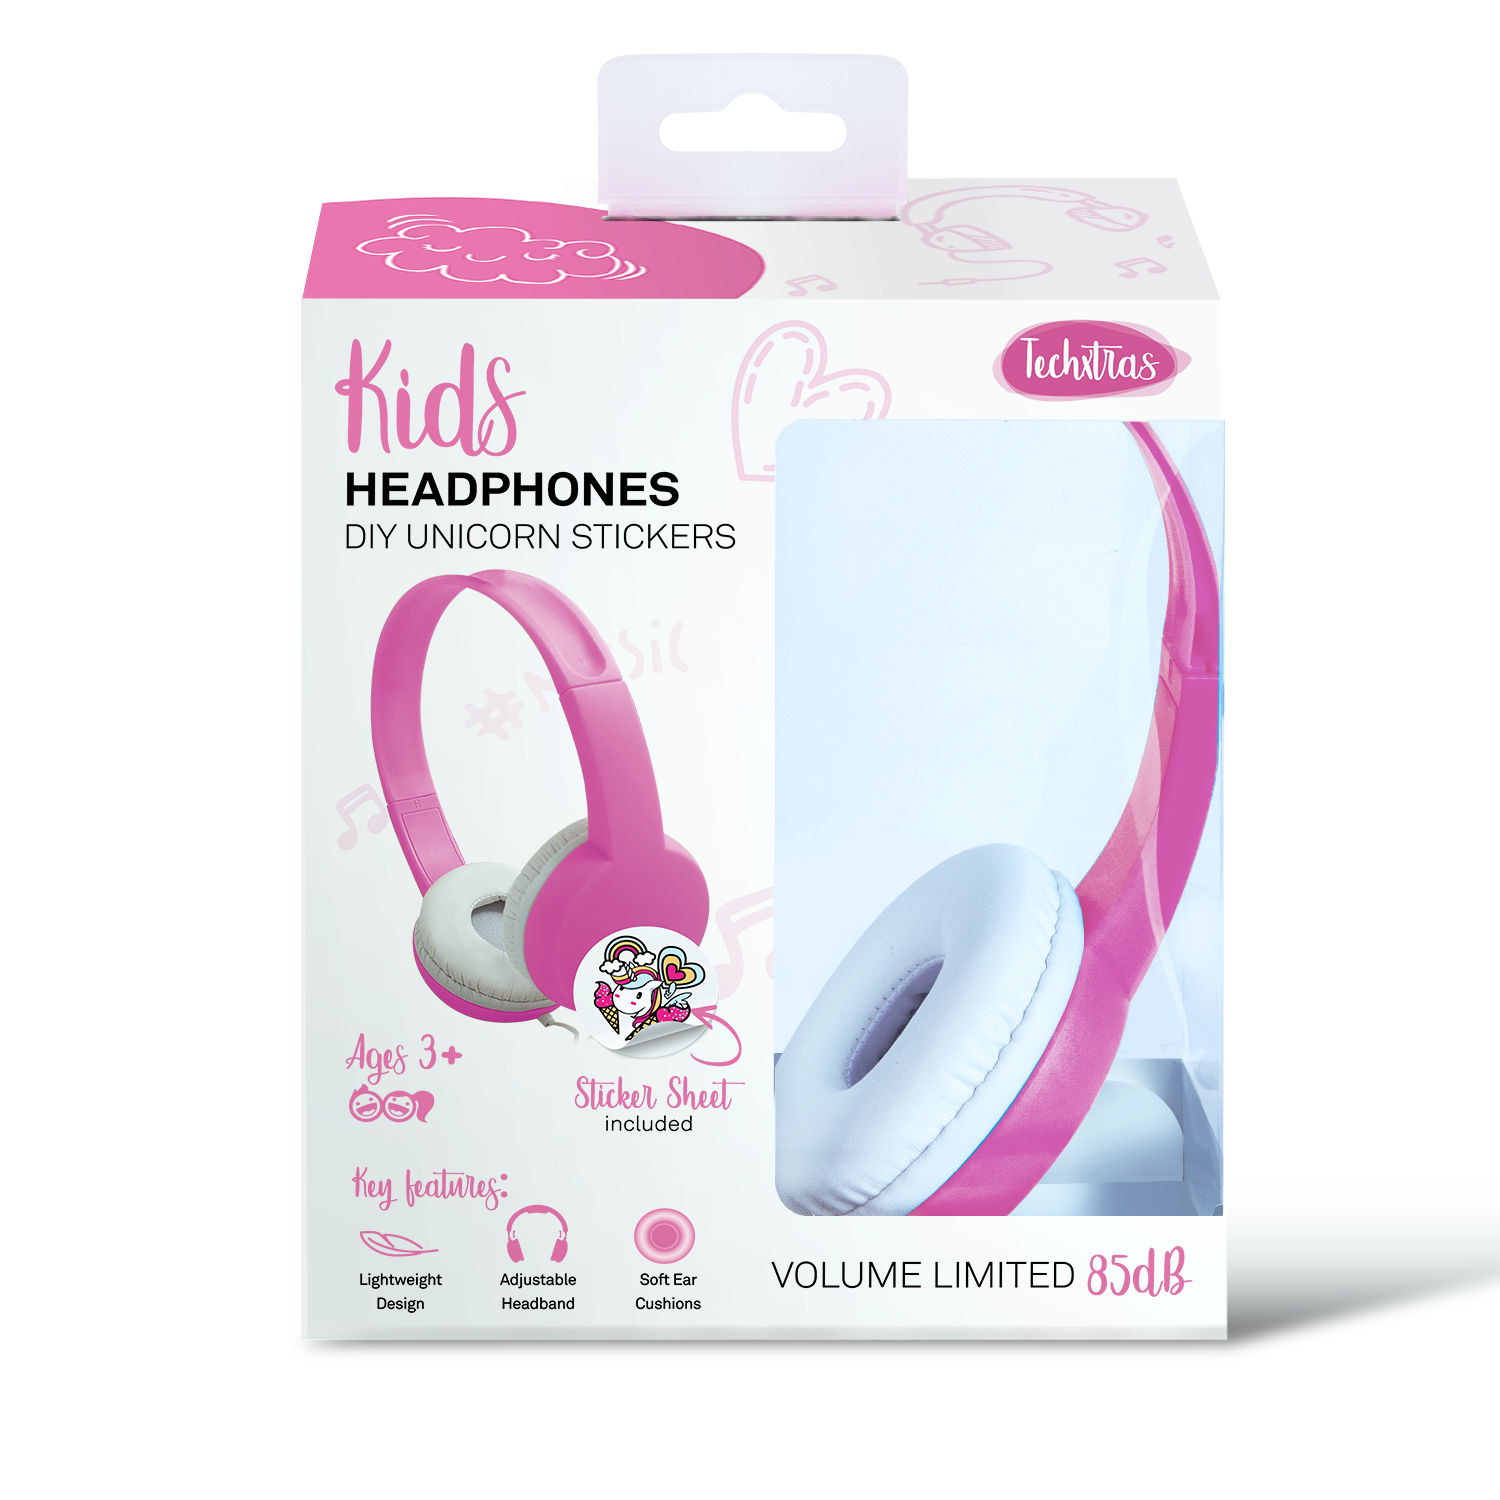 TechXtras Kids Headphones DIY Sticker - Pink